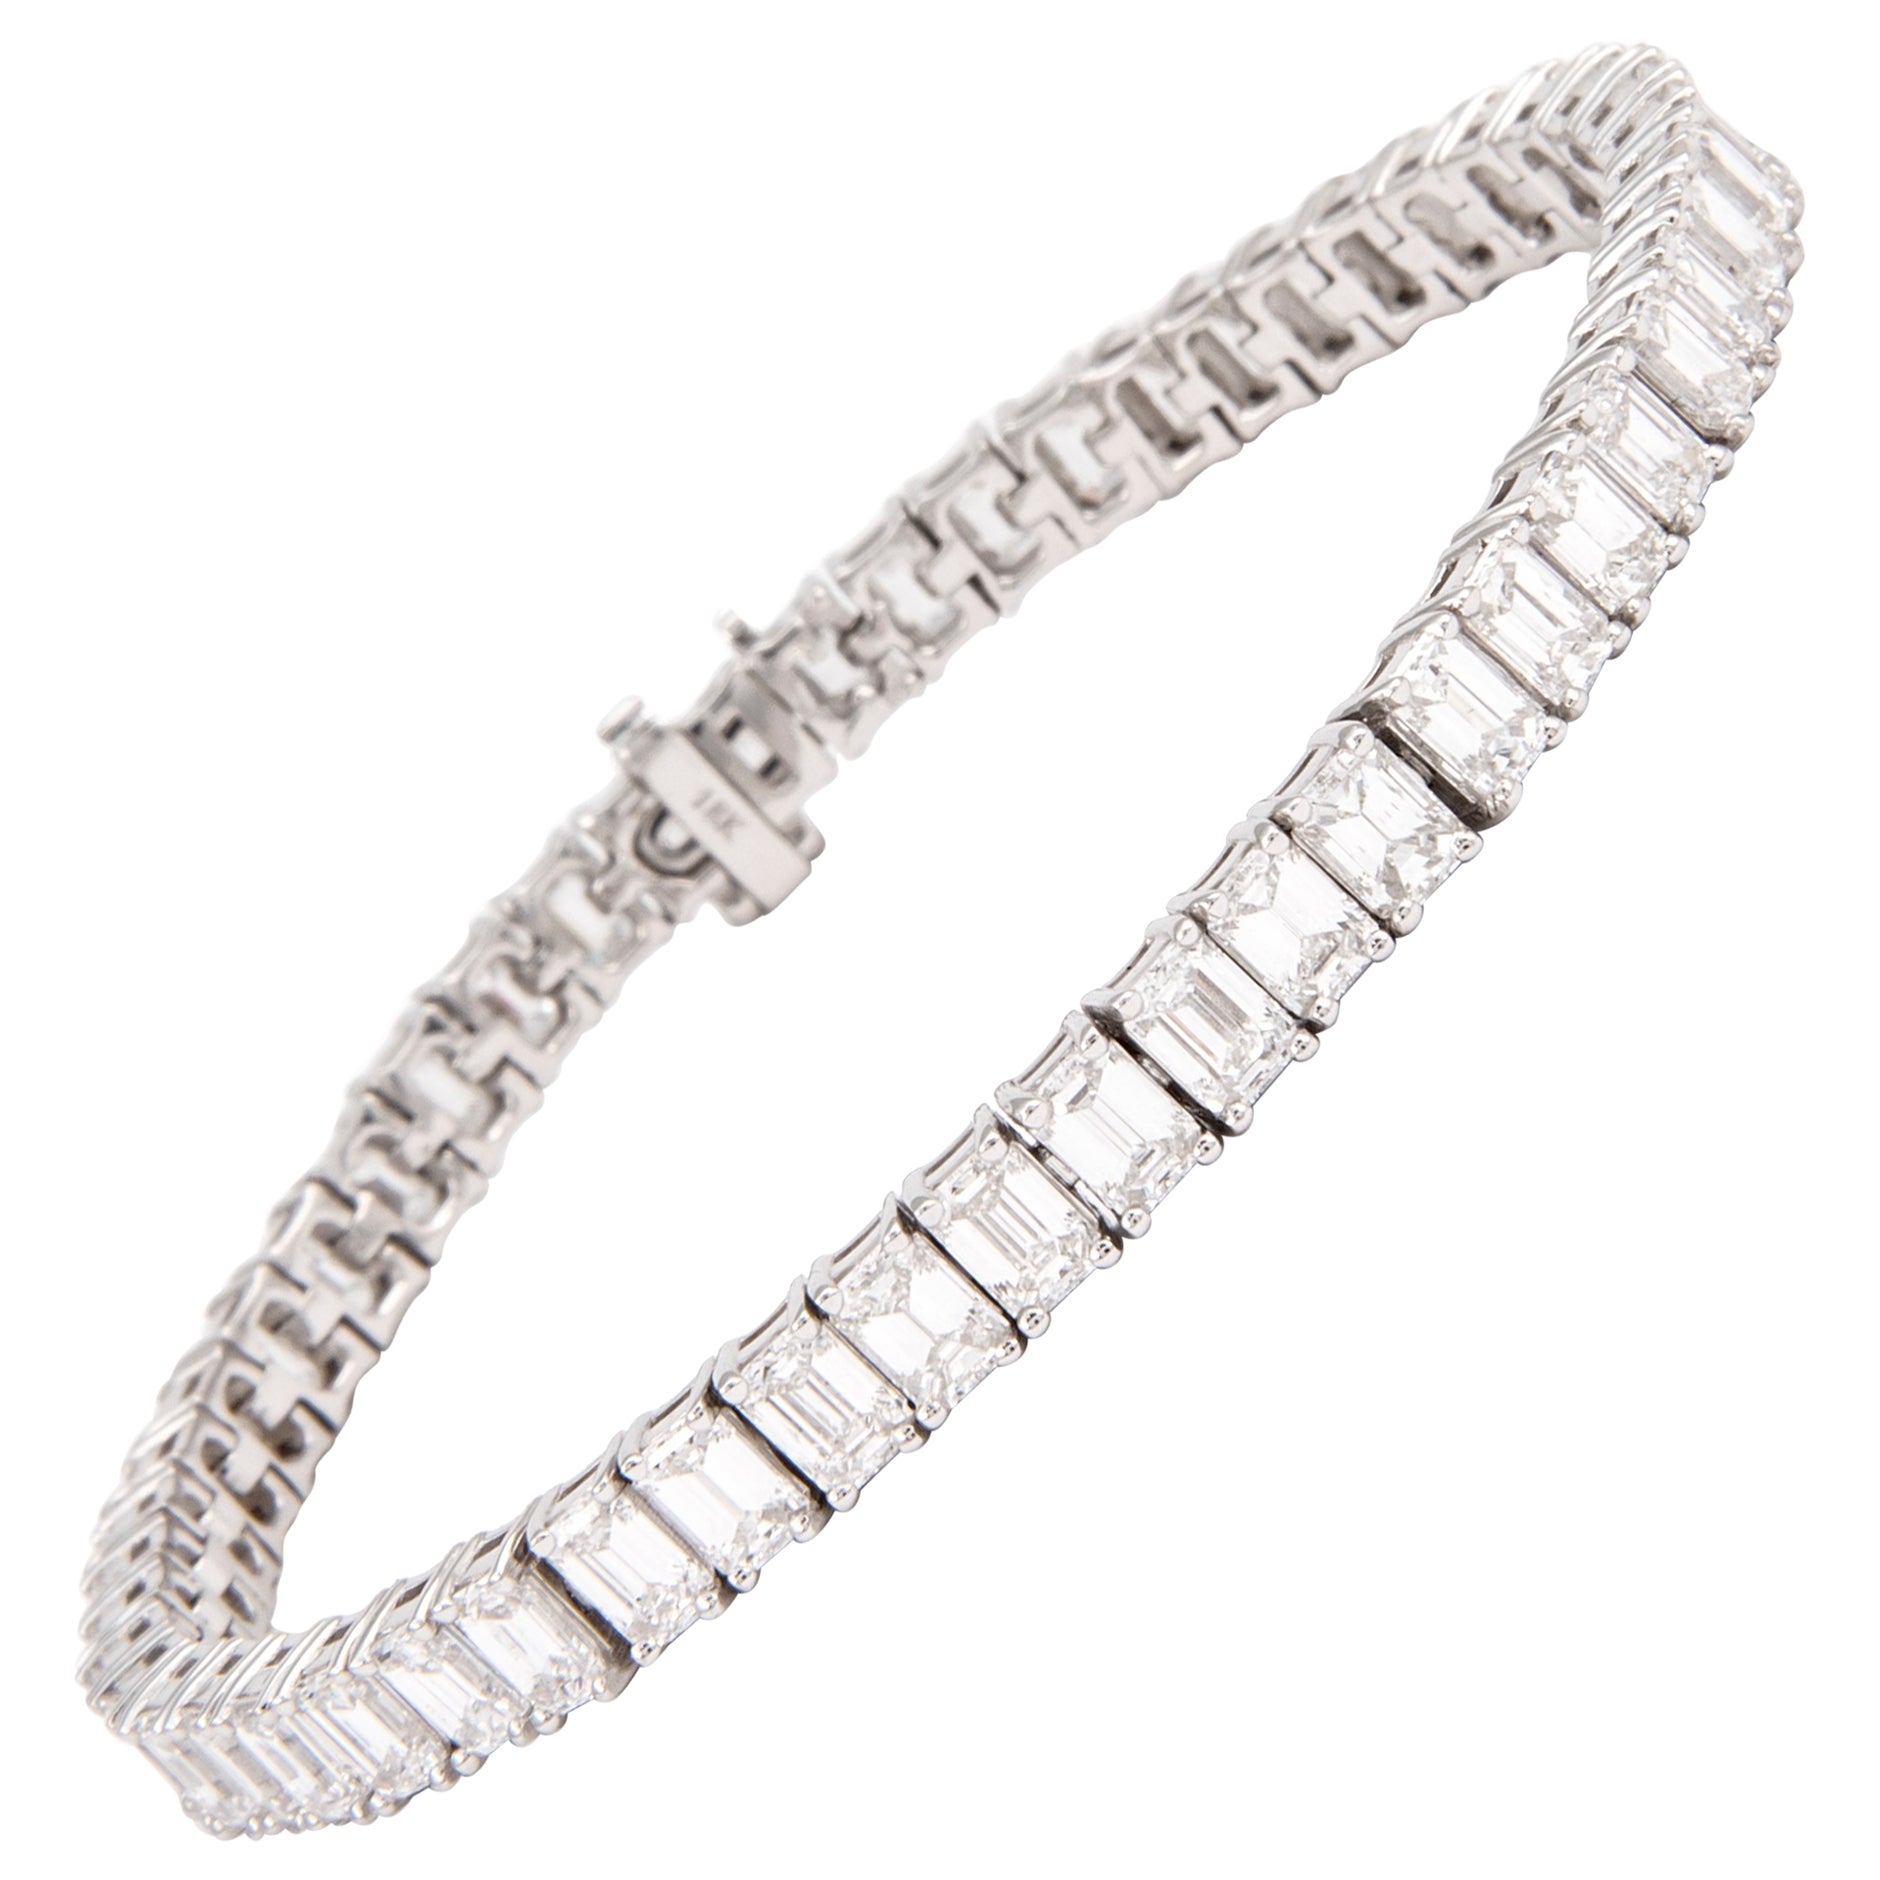 Alexander 12.65 Carat Emerald Cut Diamond Tennis Bracelet 18-Karat White Gold For Sale